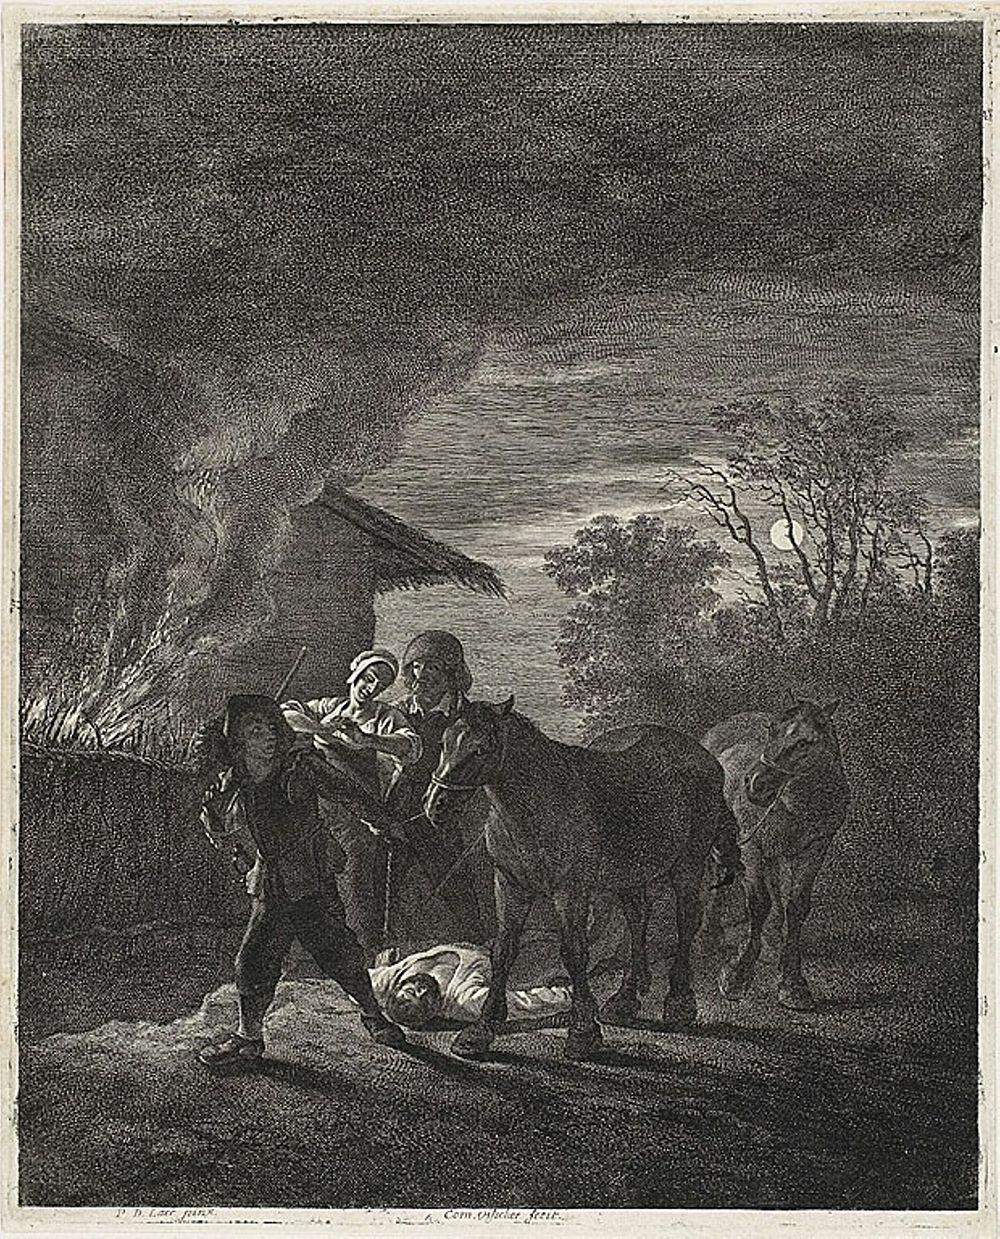 The Robbery of Horses, A Moonlight Scene by Cornelis Visscher